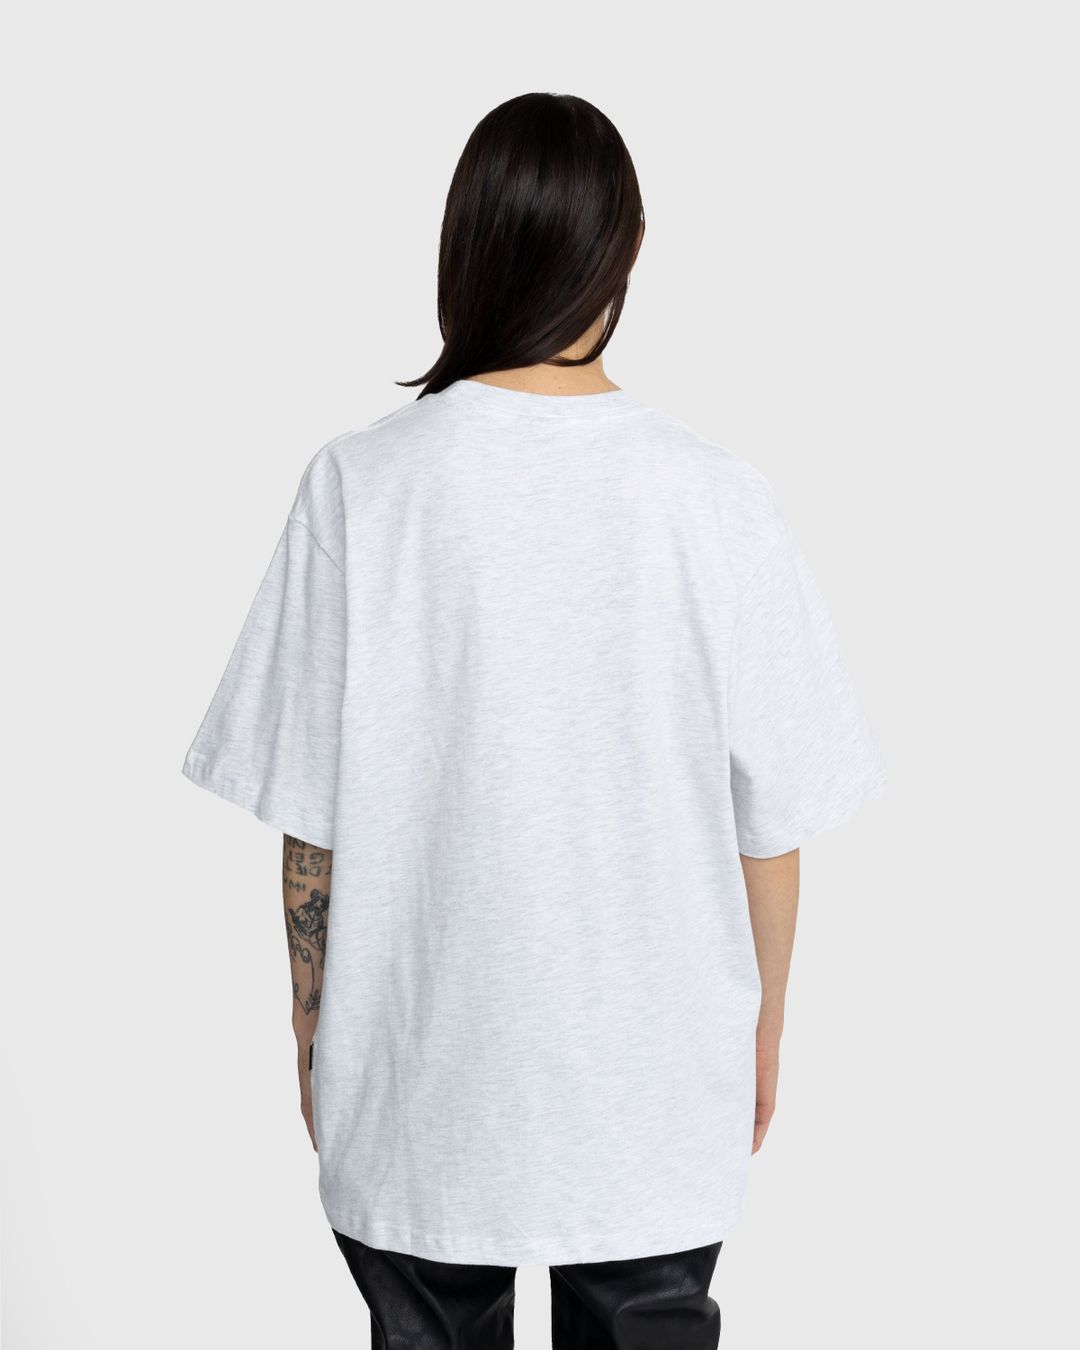 Noon Goons – Wave T-Shirt Grey | Highsnobiety Shop